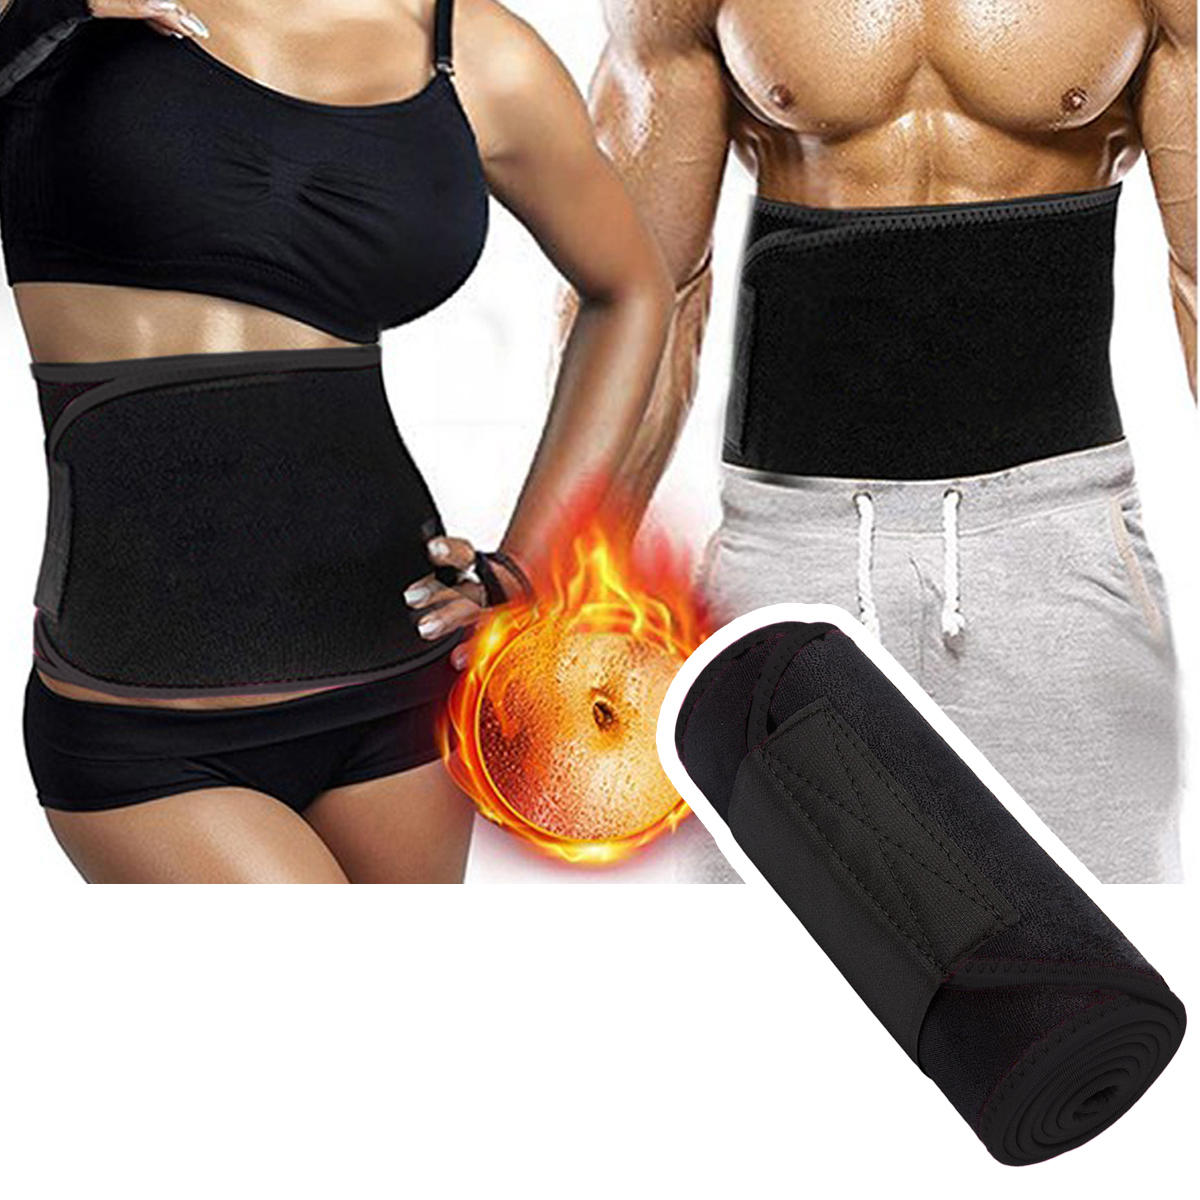 KALOAD Sports Fitness Body Shaping Waist Belt Elastic Pressure Straining Waist Support - Black